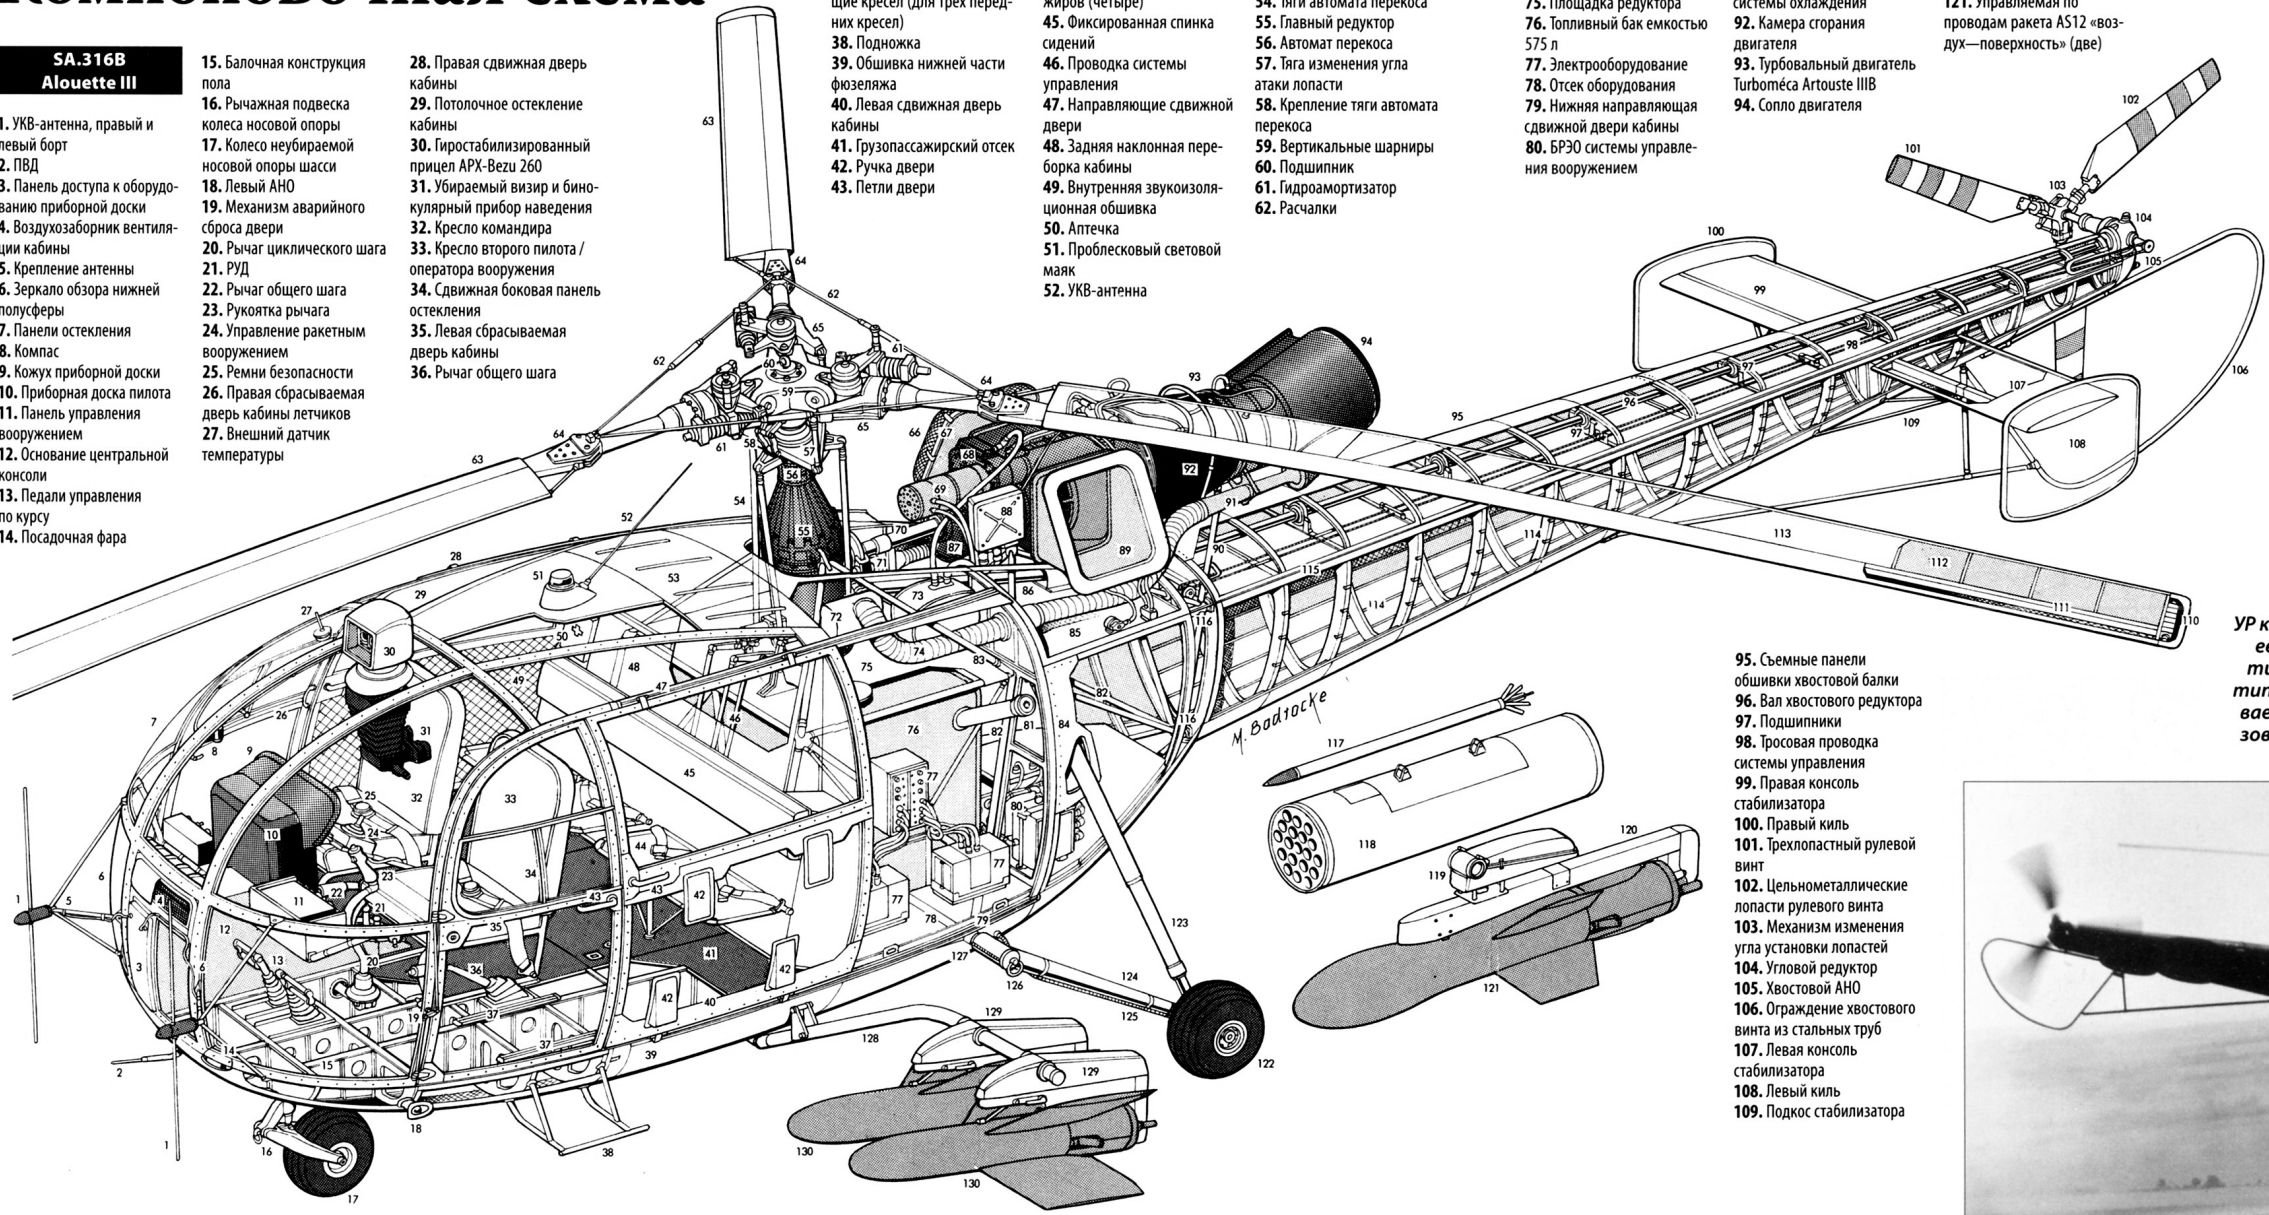 Sa.313b Alouette II чертежи